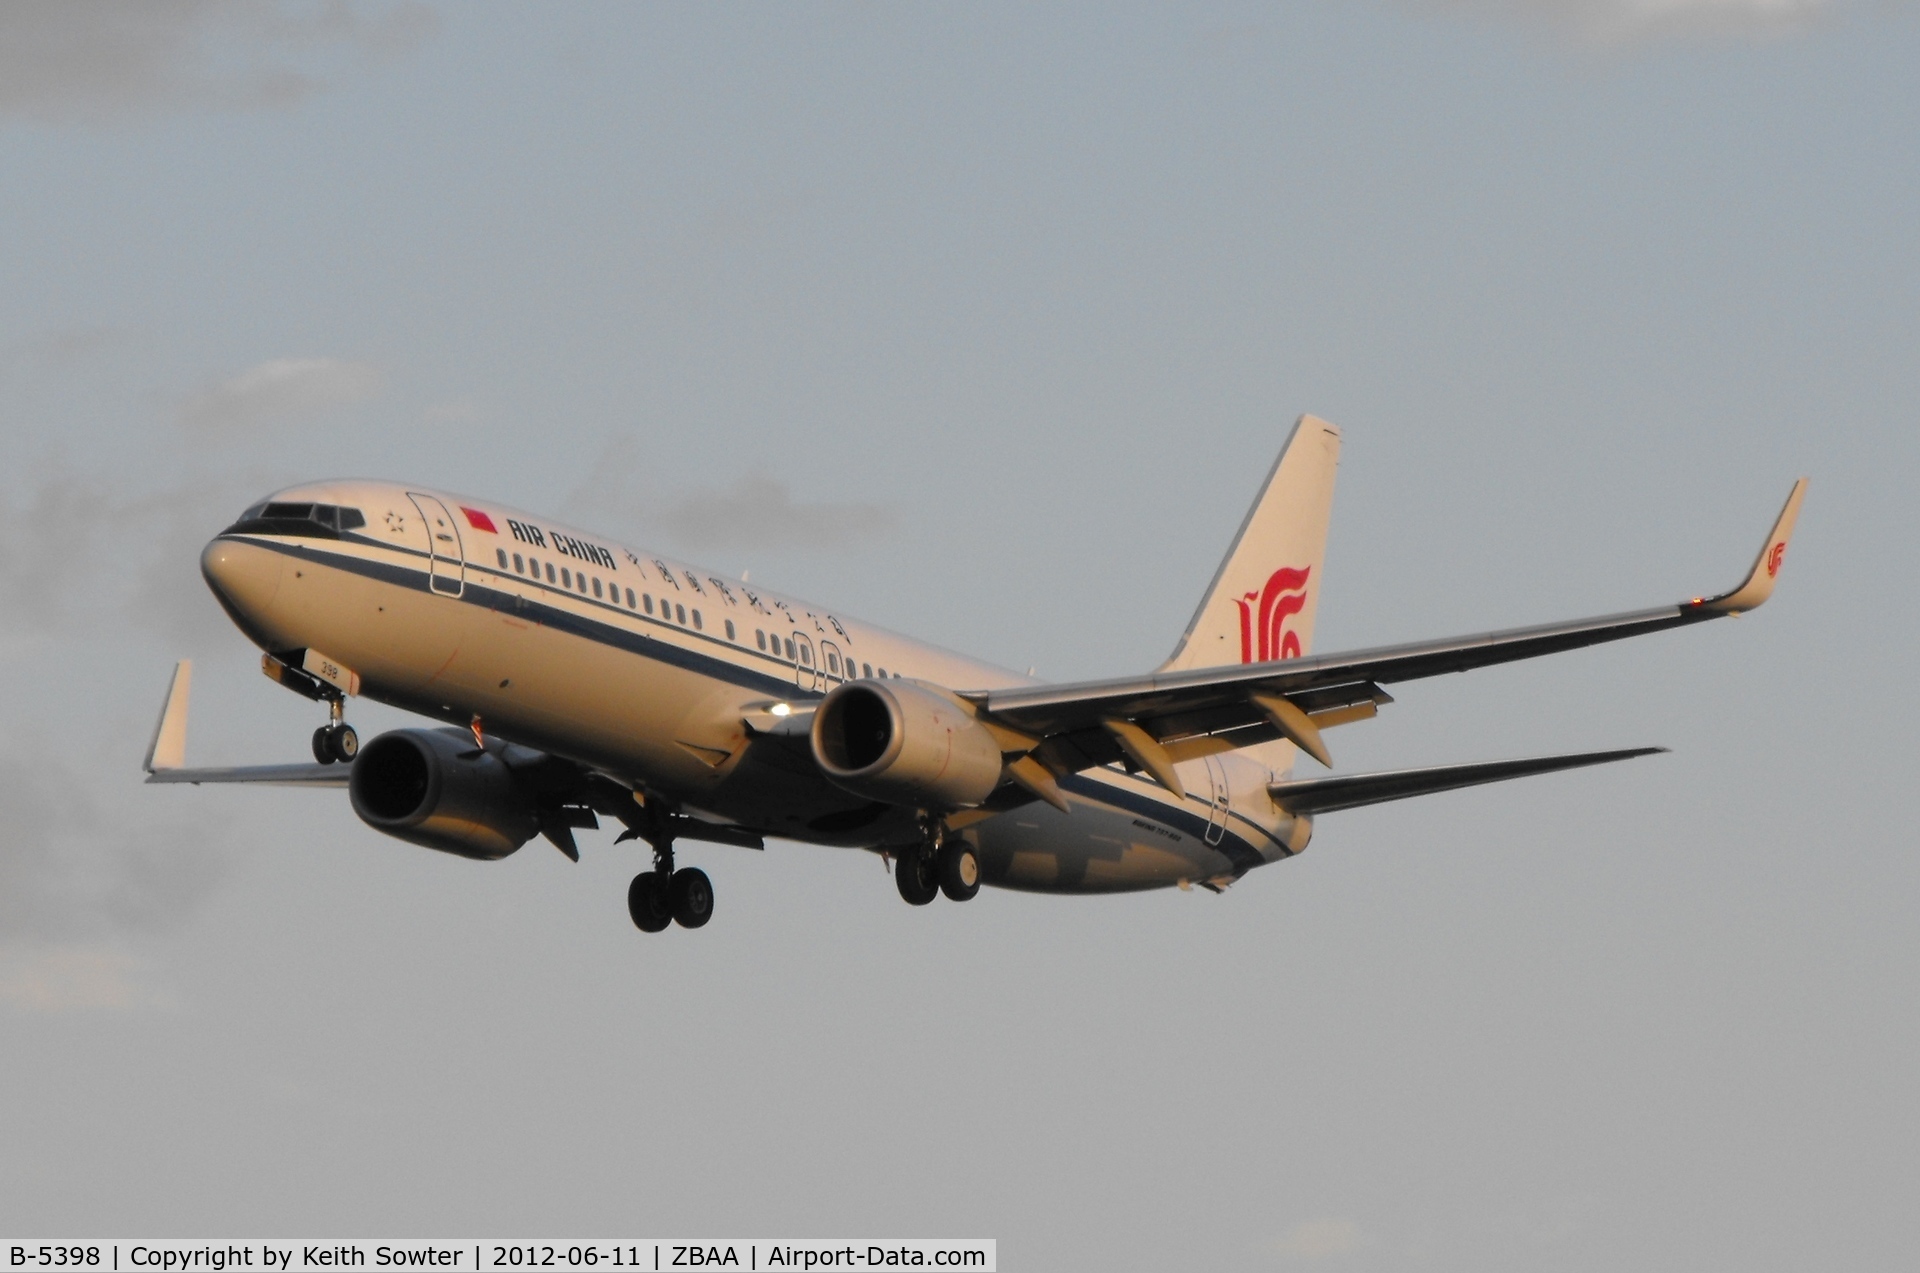 B-5398, 2008 Boeing 737-89L C/N 36490, Short finals to land